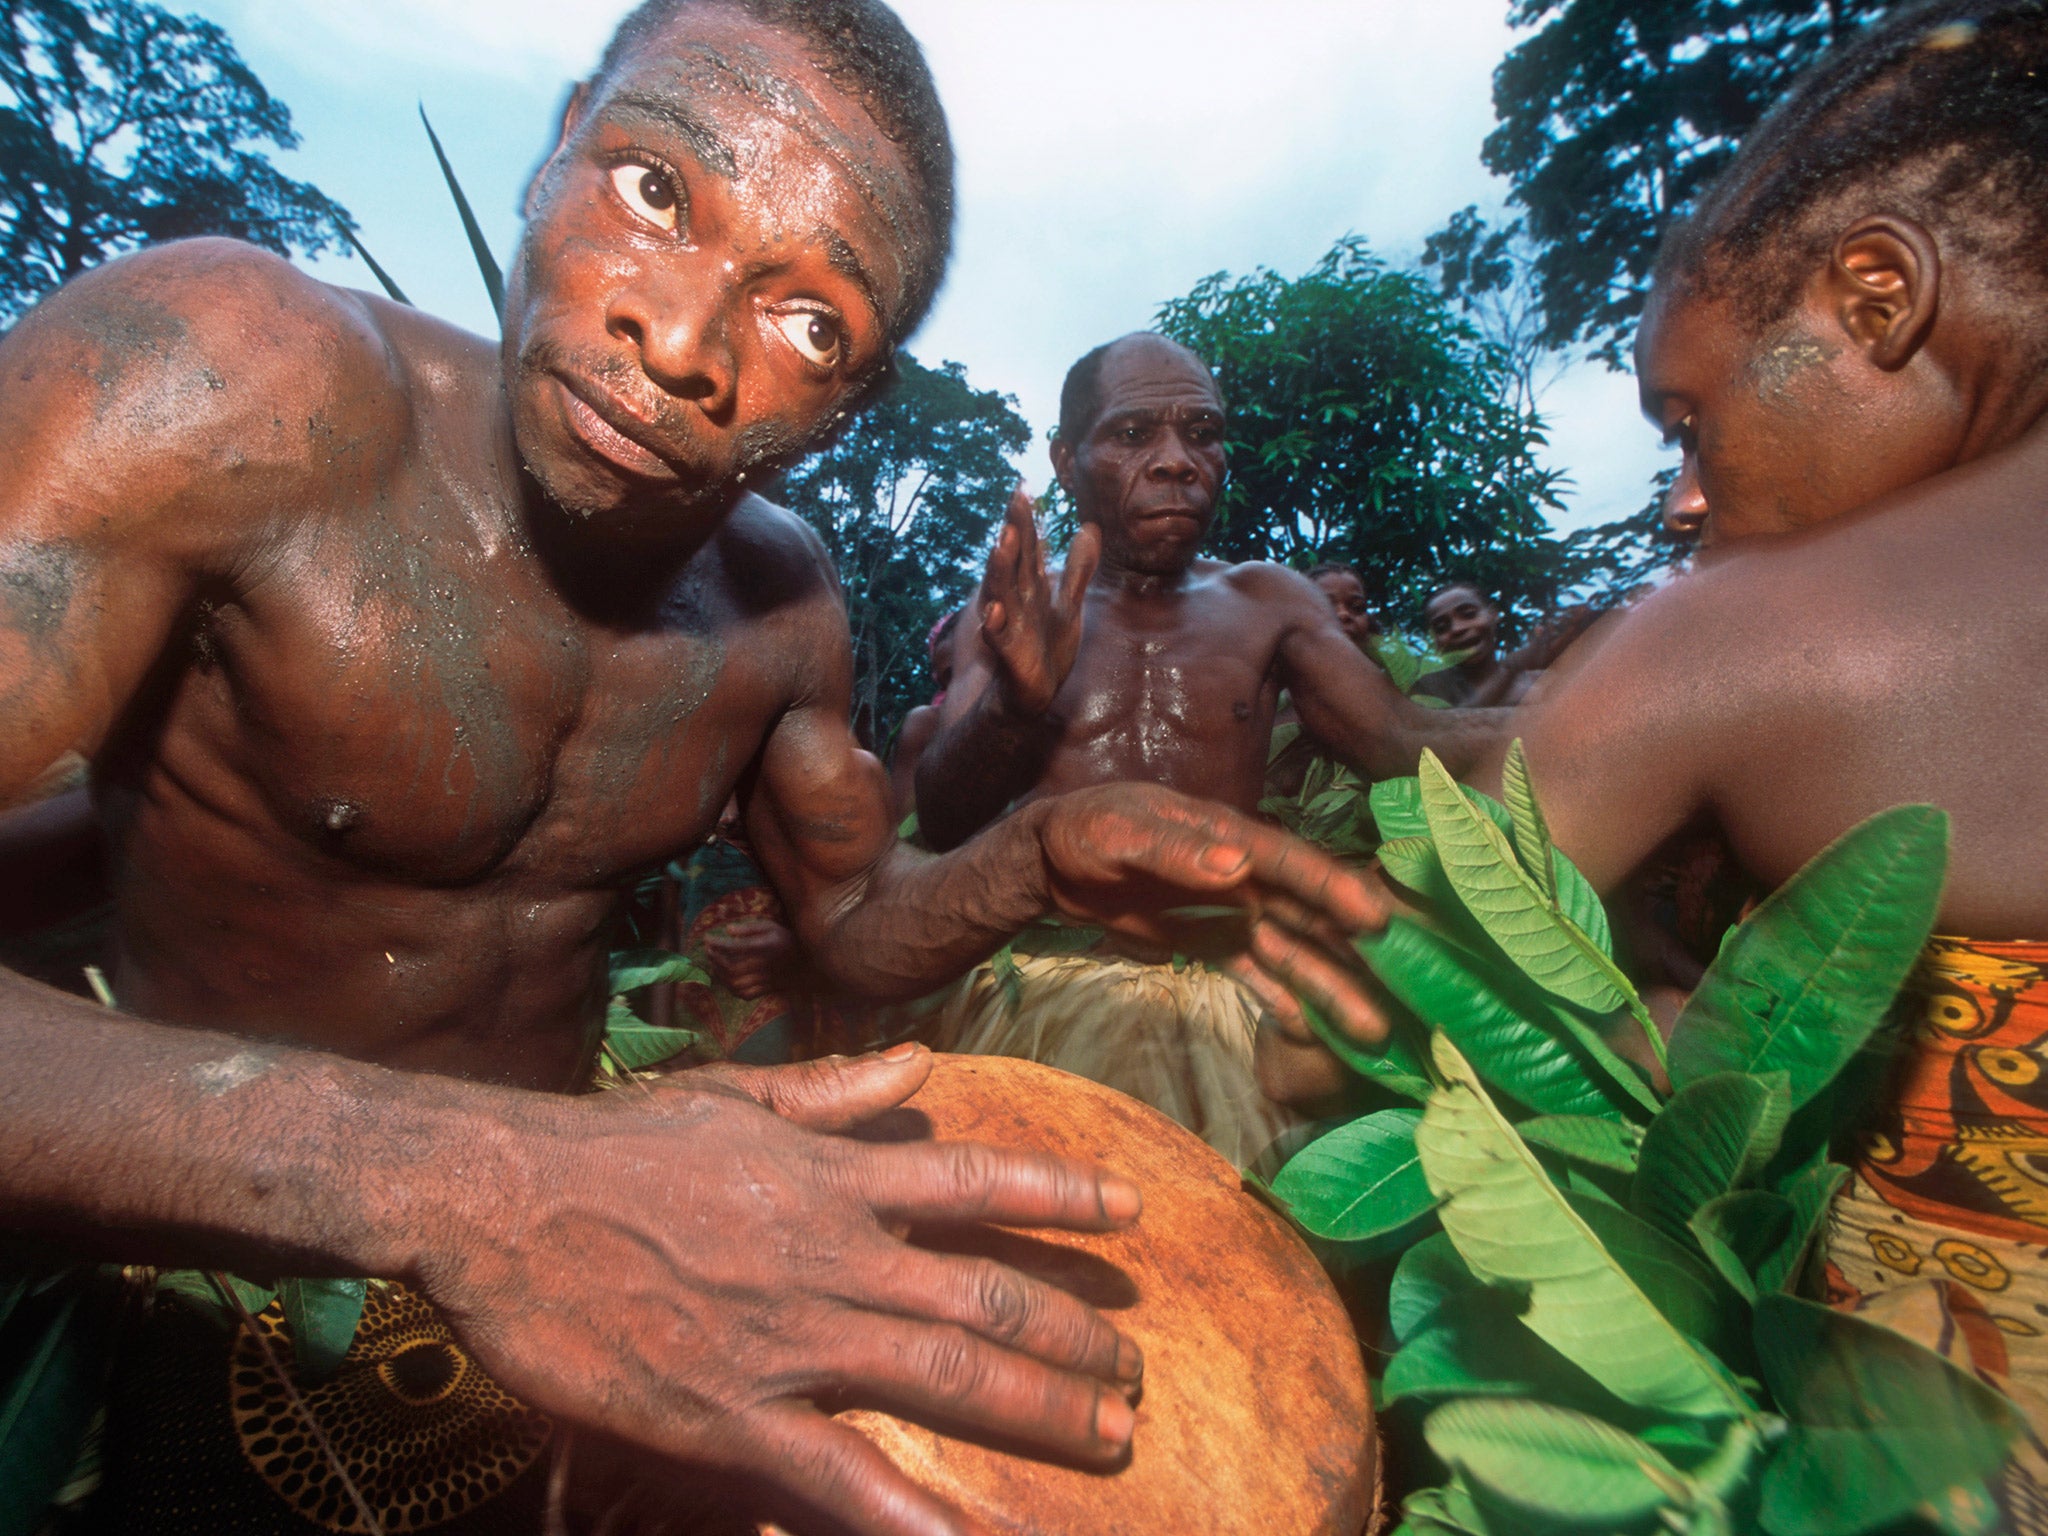 Baka pygmies celebrating with dance and music. File photo